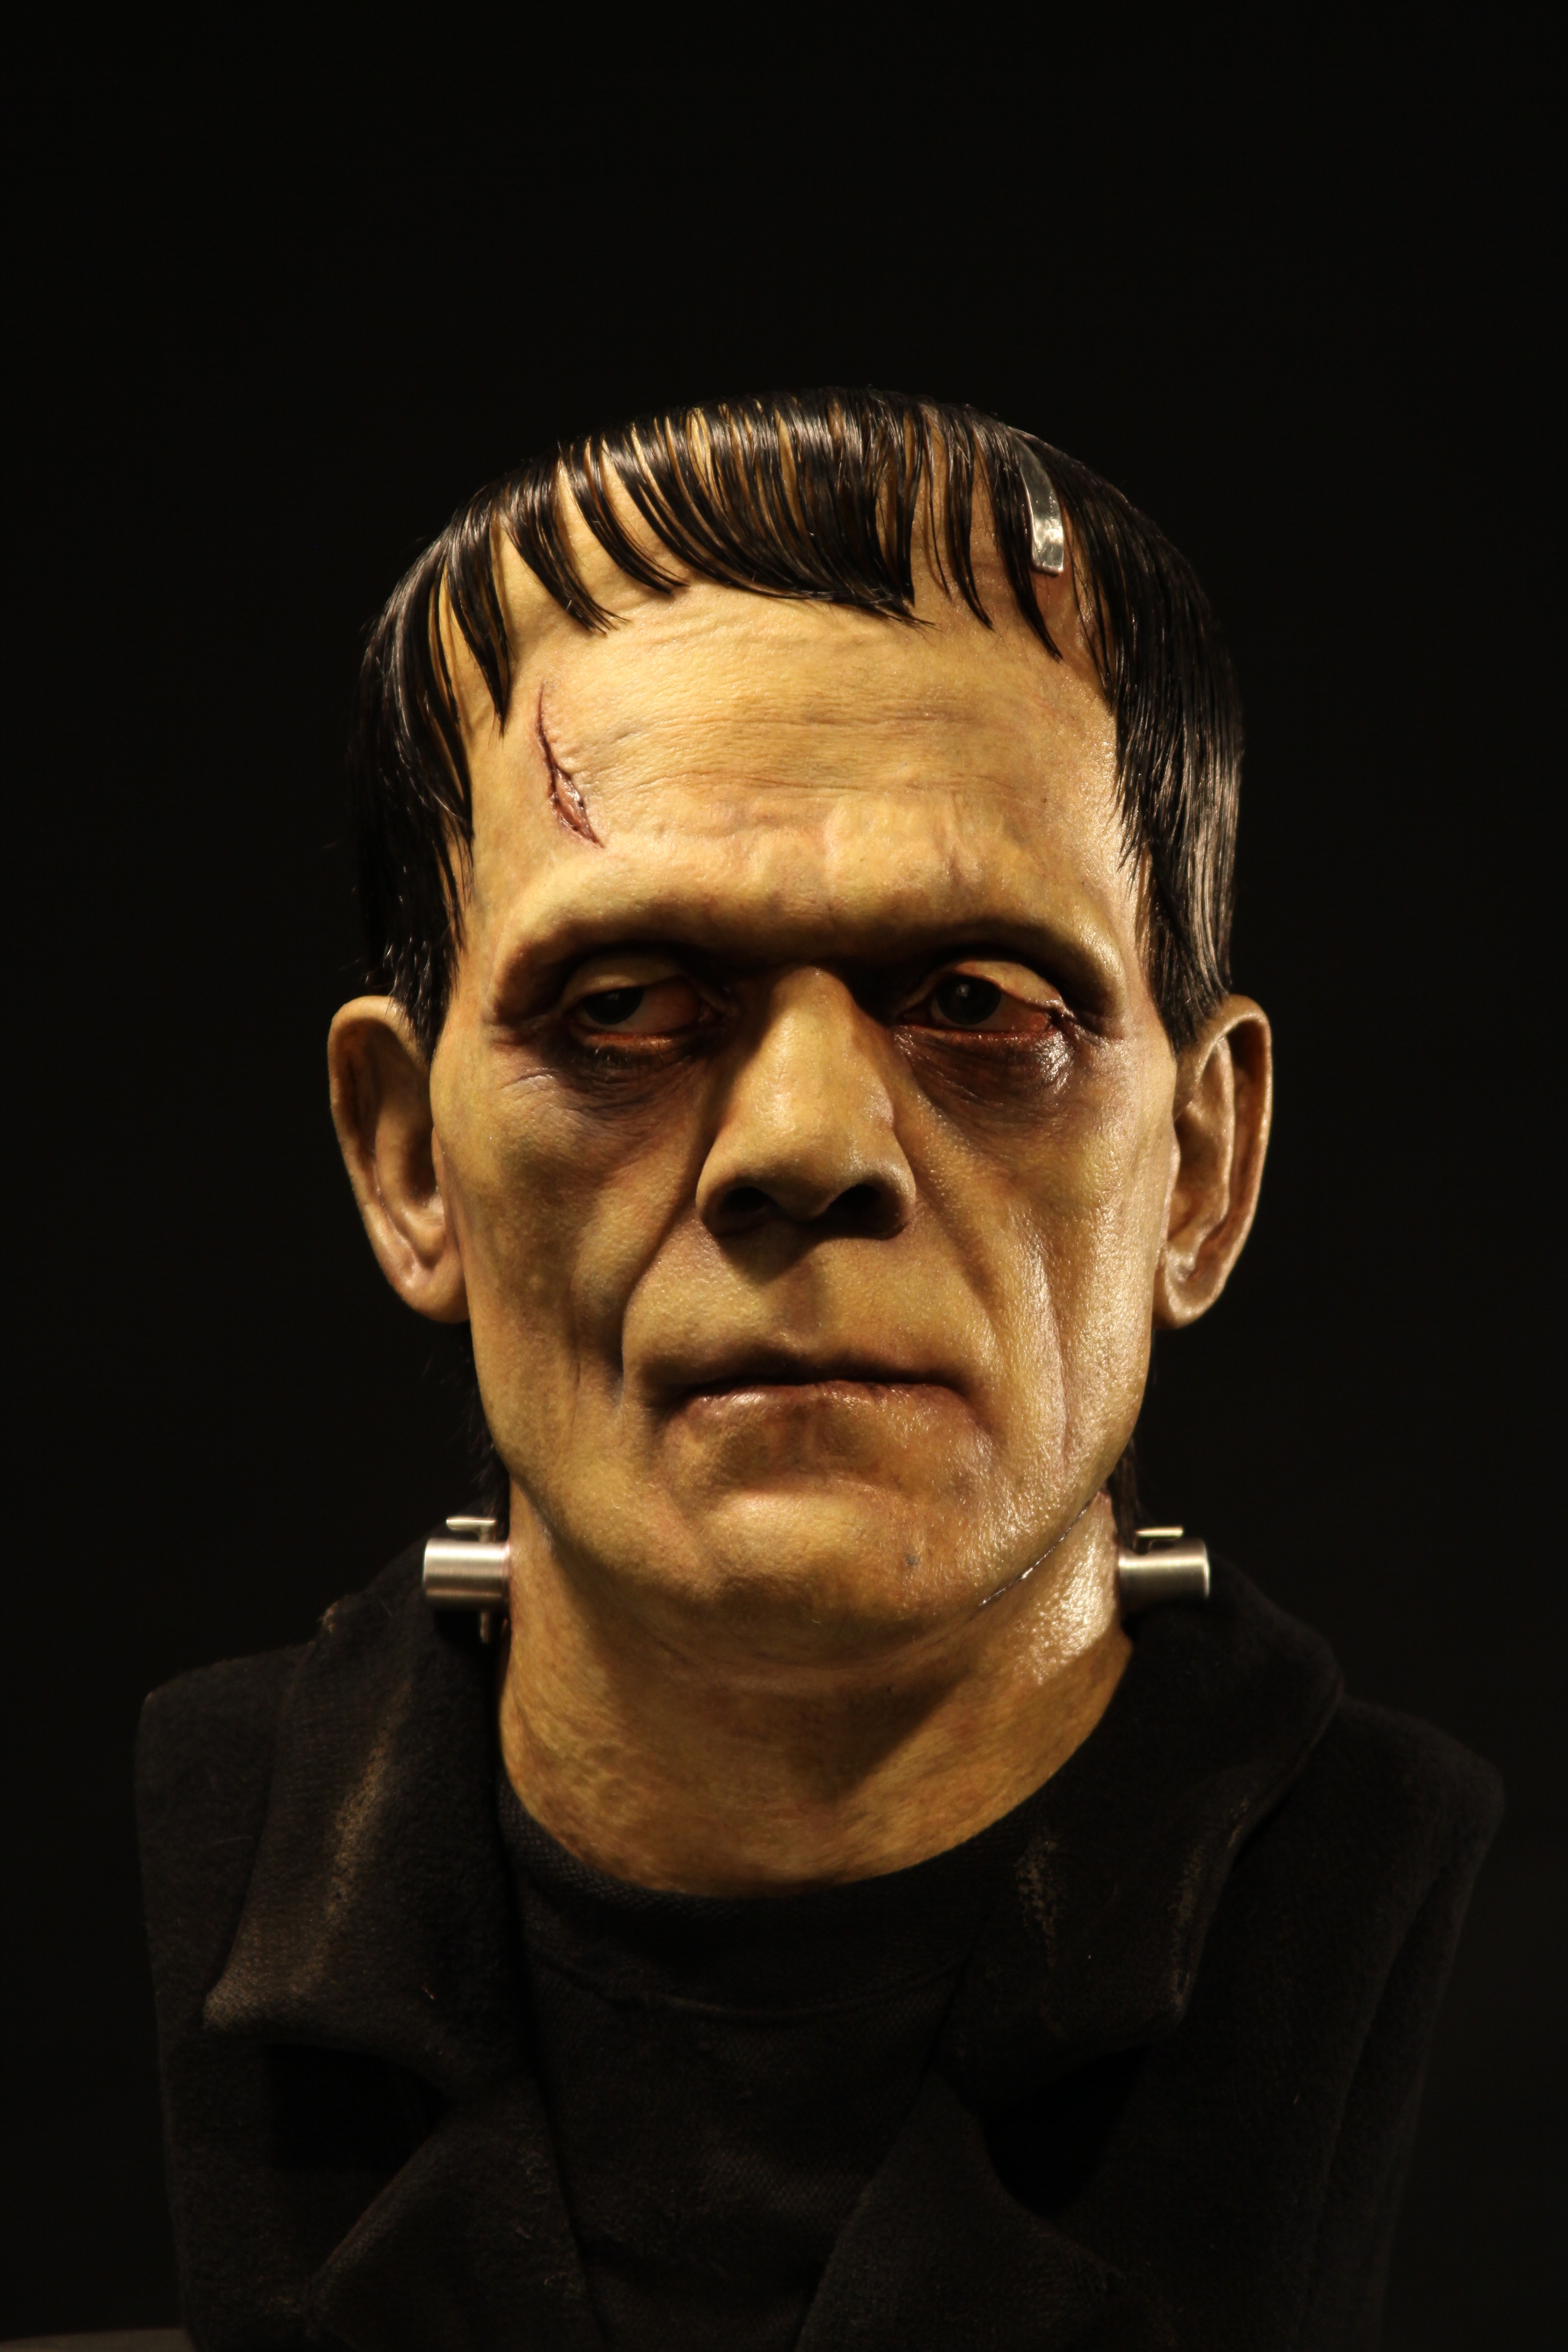 Frankenstein Backgrounds on Wallpapers Vista